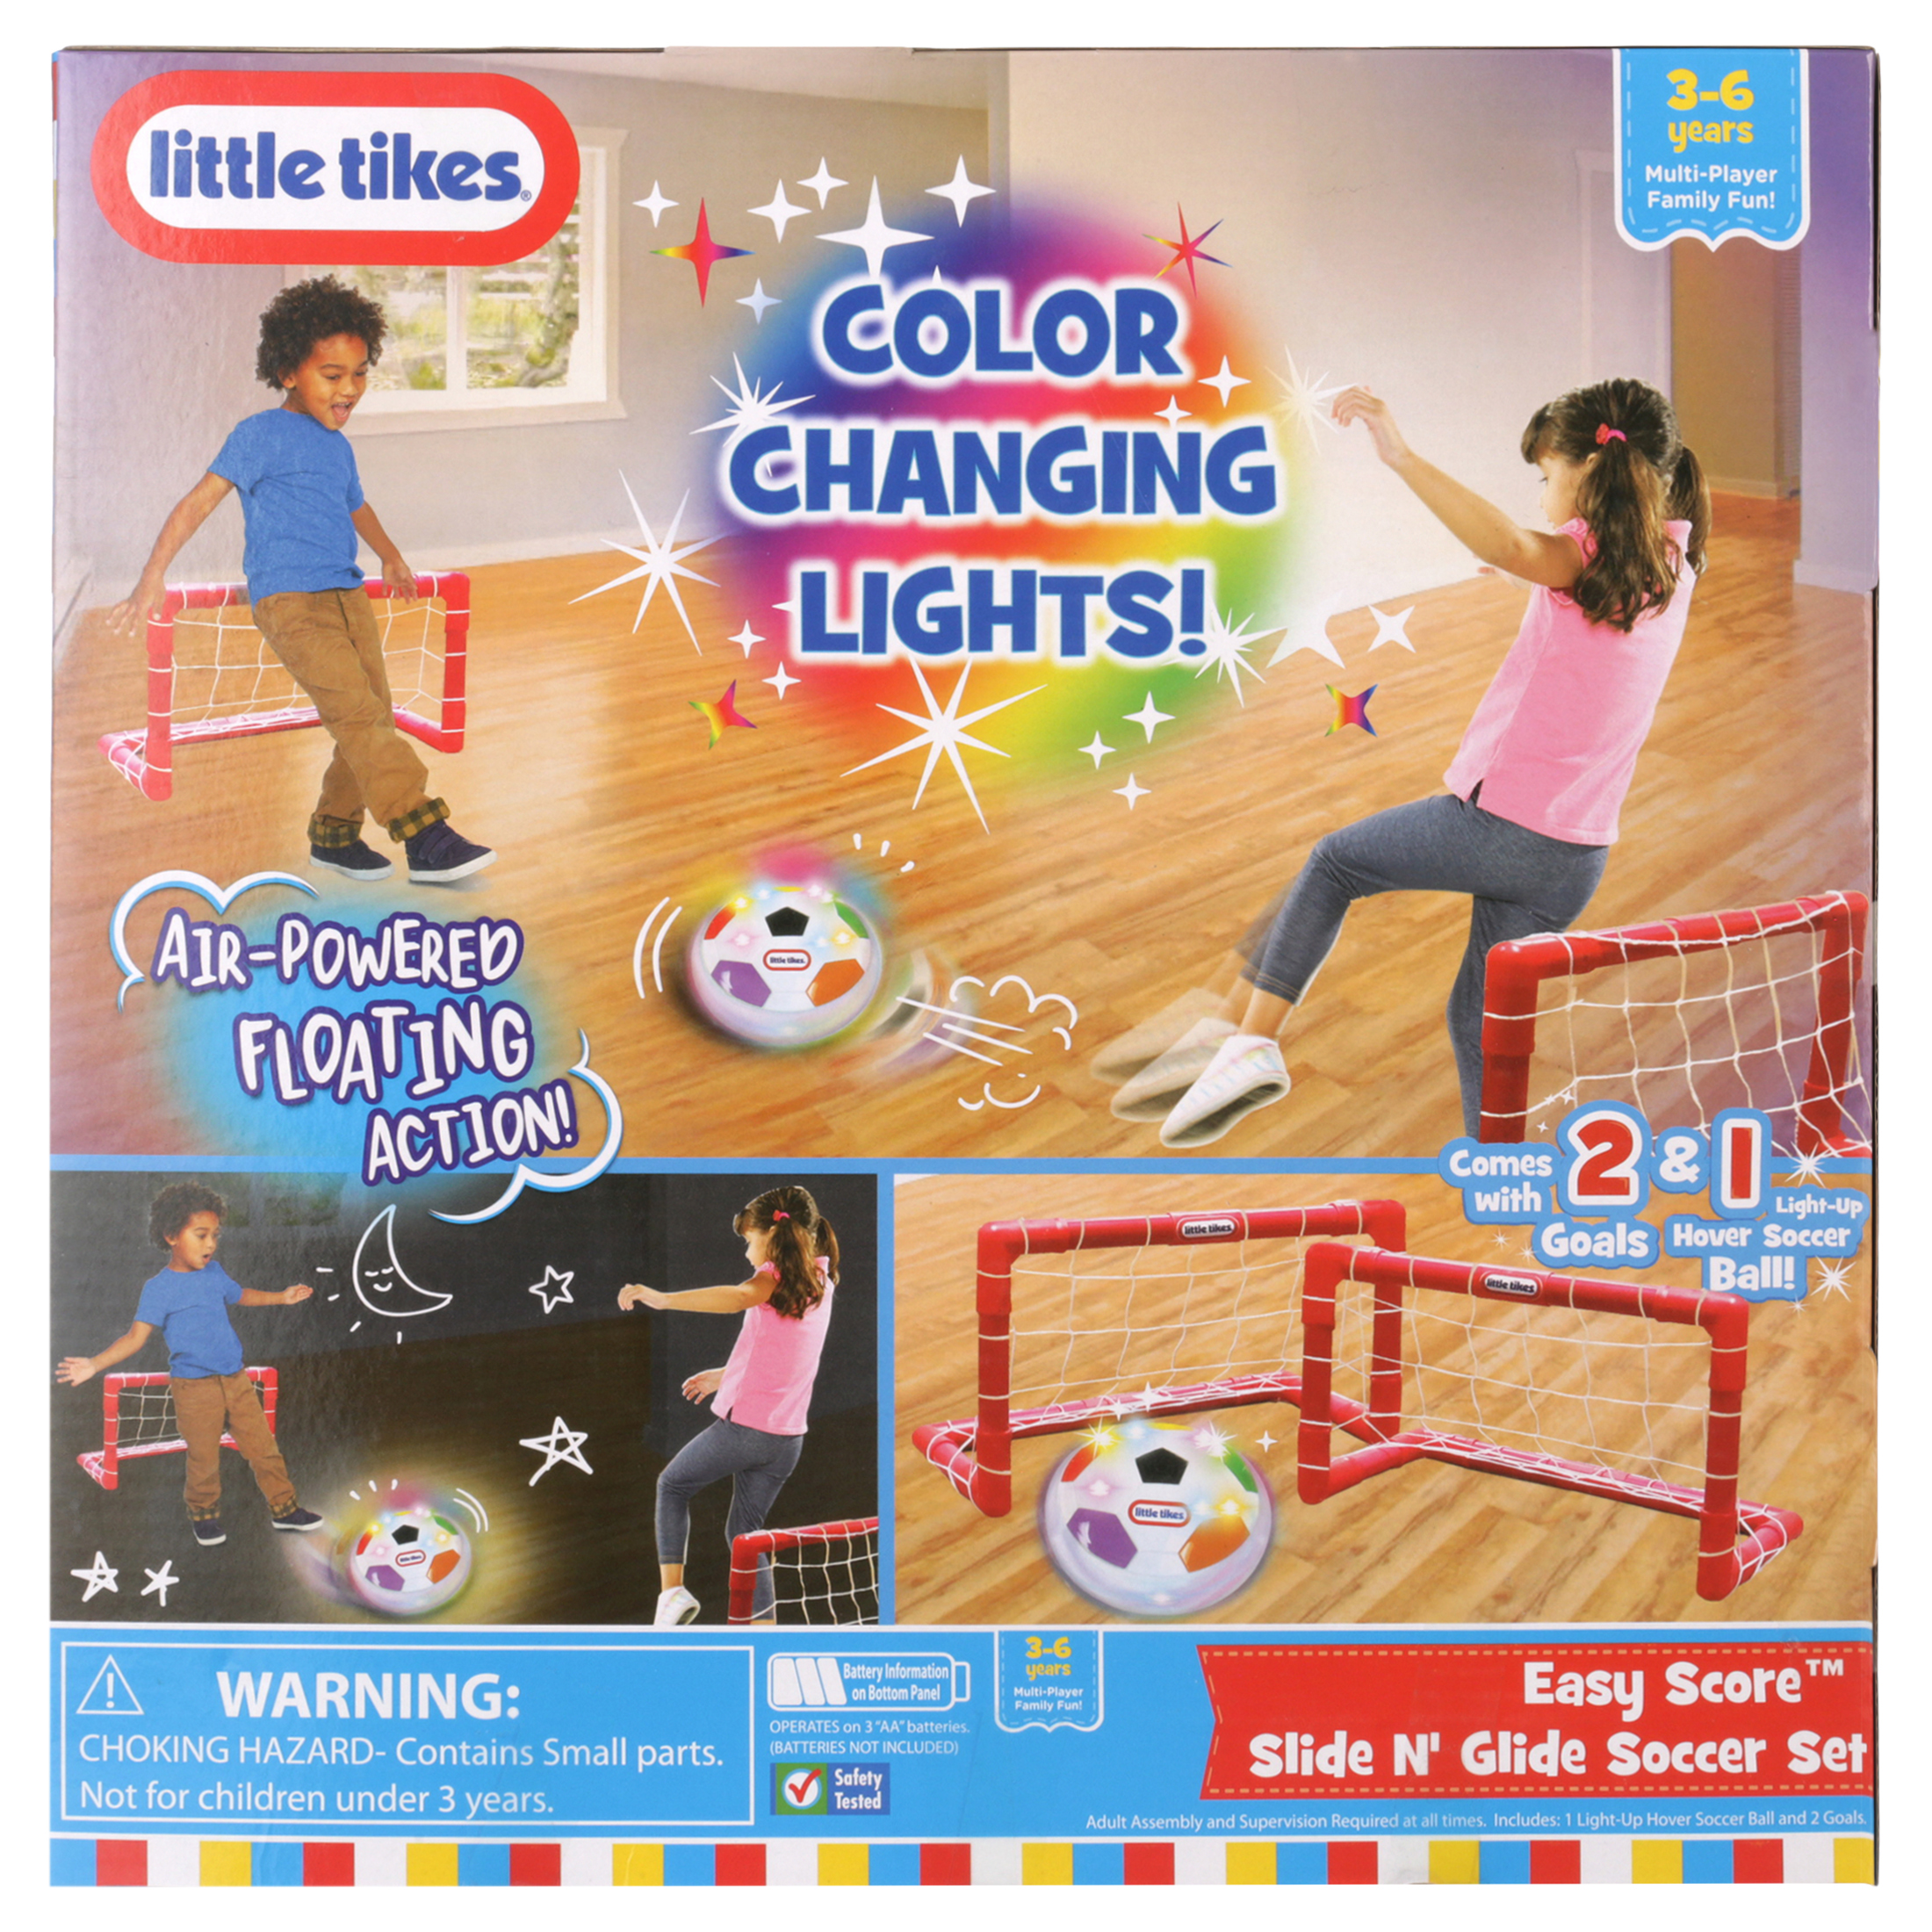 Little Tikes Lt Slide N Glide Soccer Set - image 4 of 13